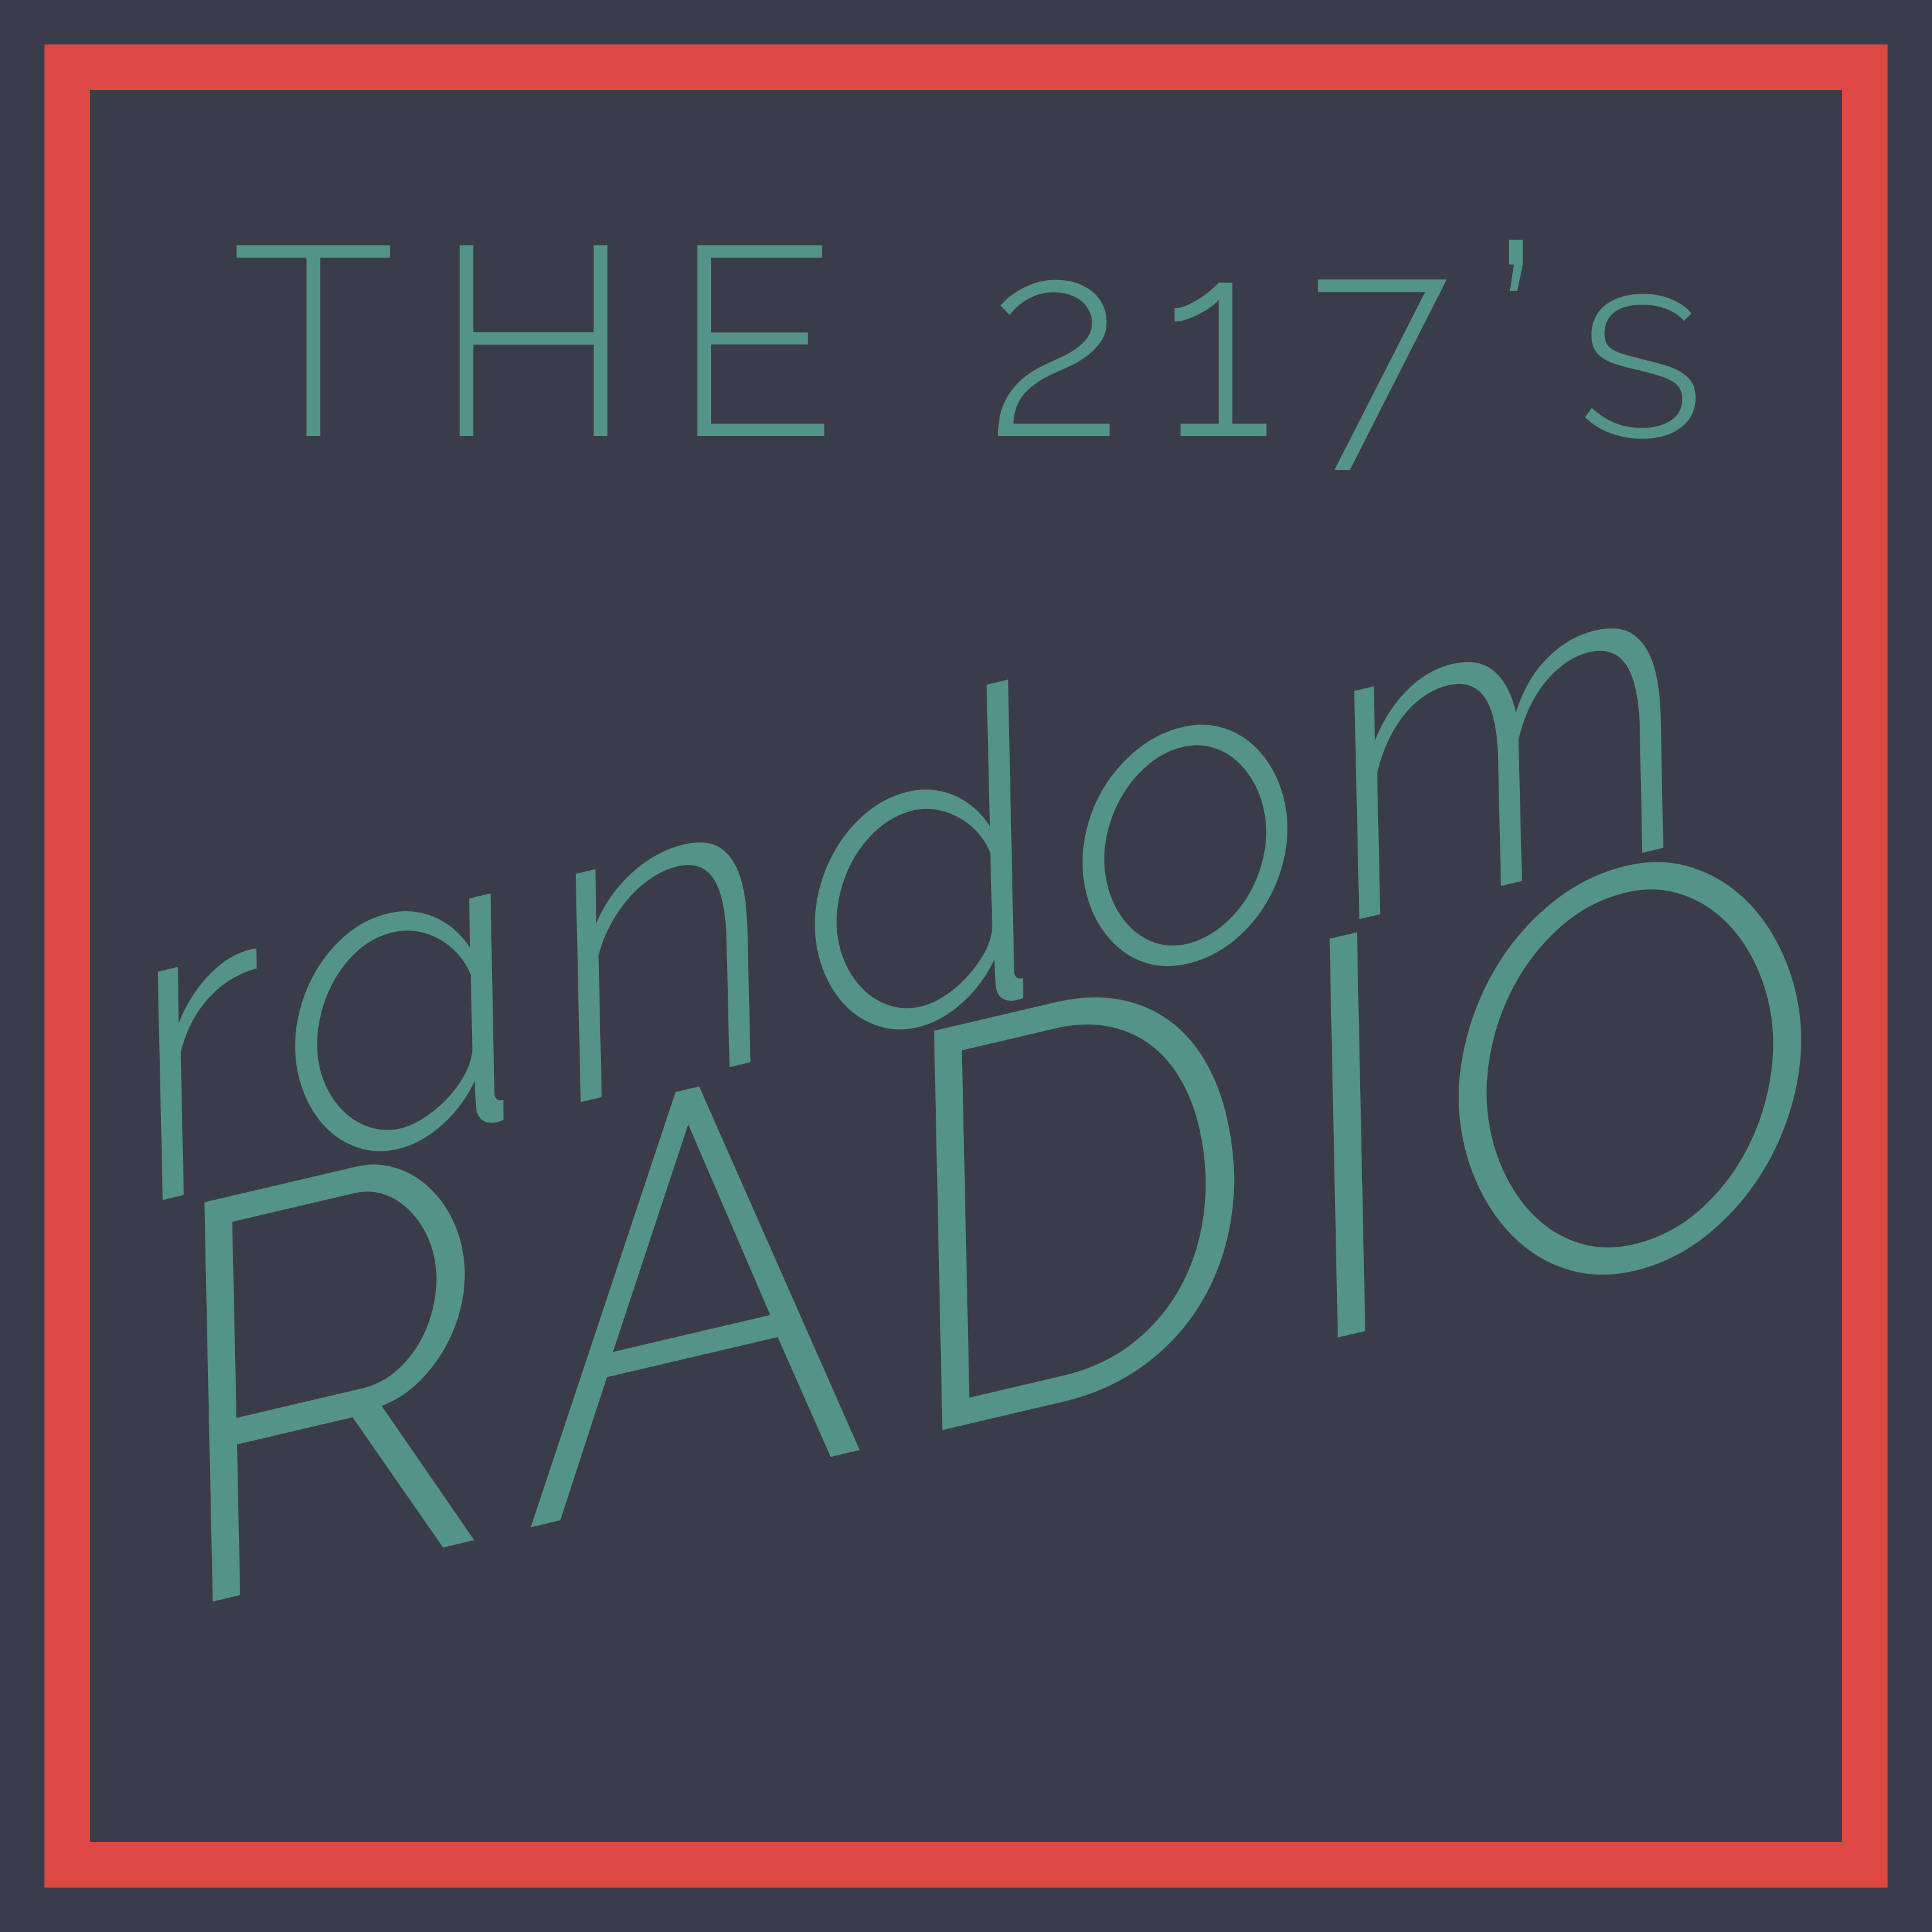 THE 217's RANDOM RADIO